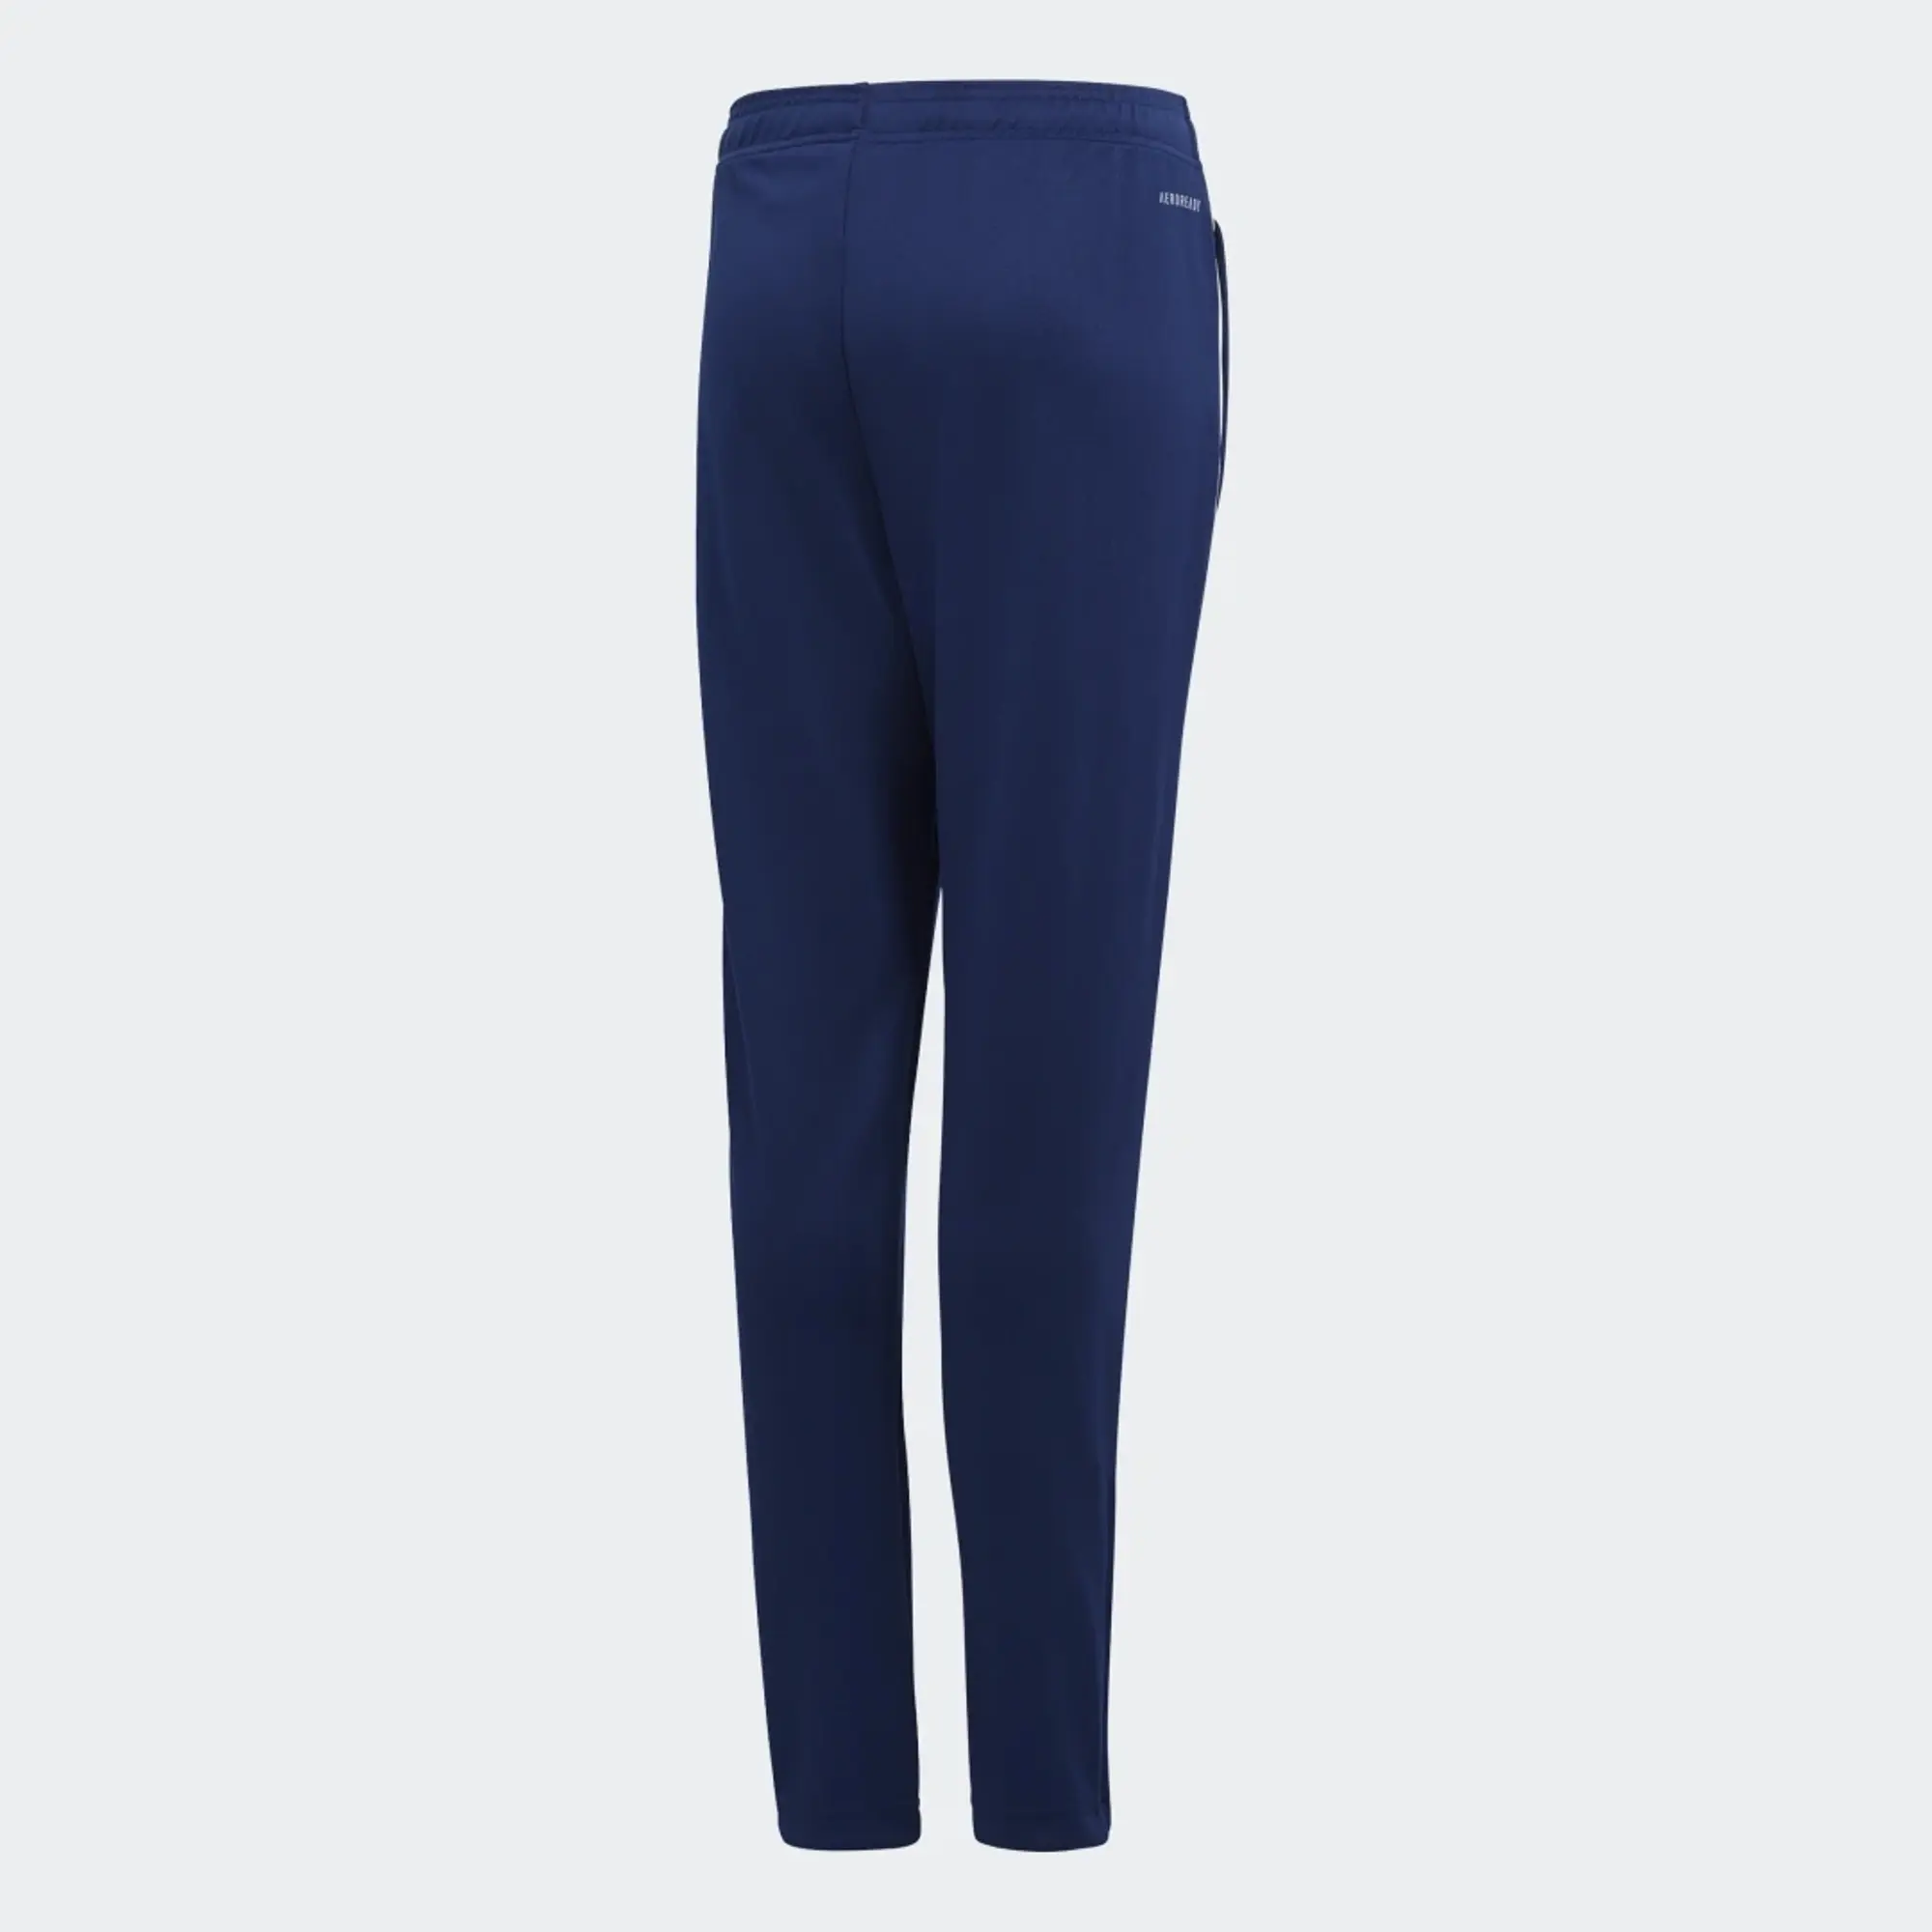 Adidas Core 18 Training Long Pants  - Blue